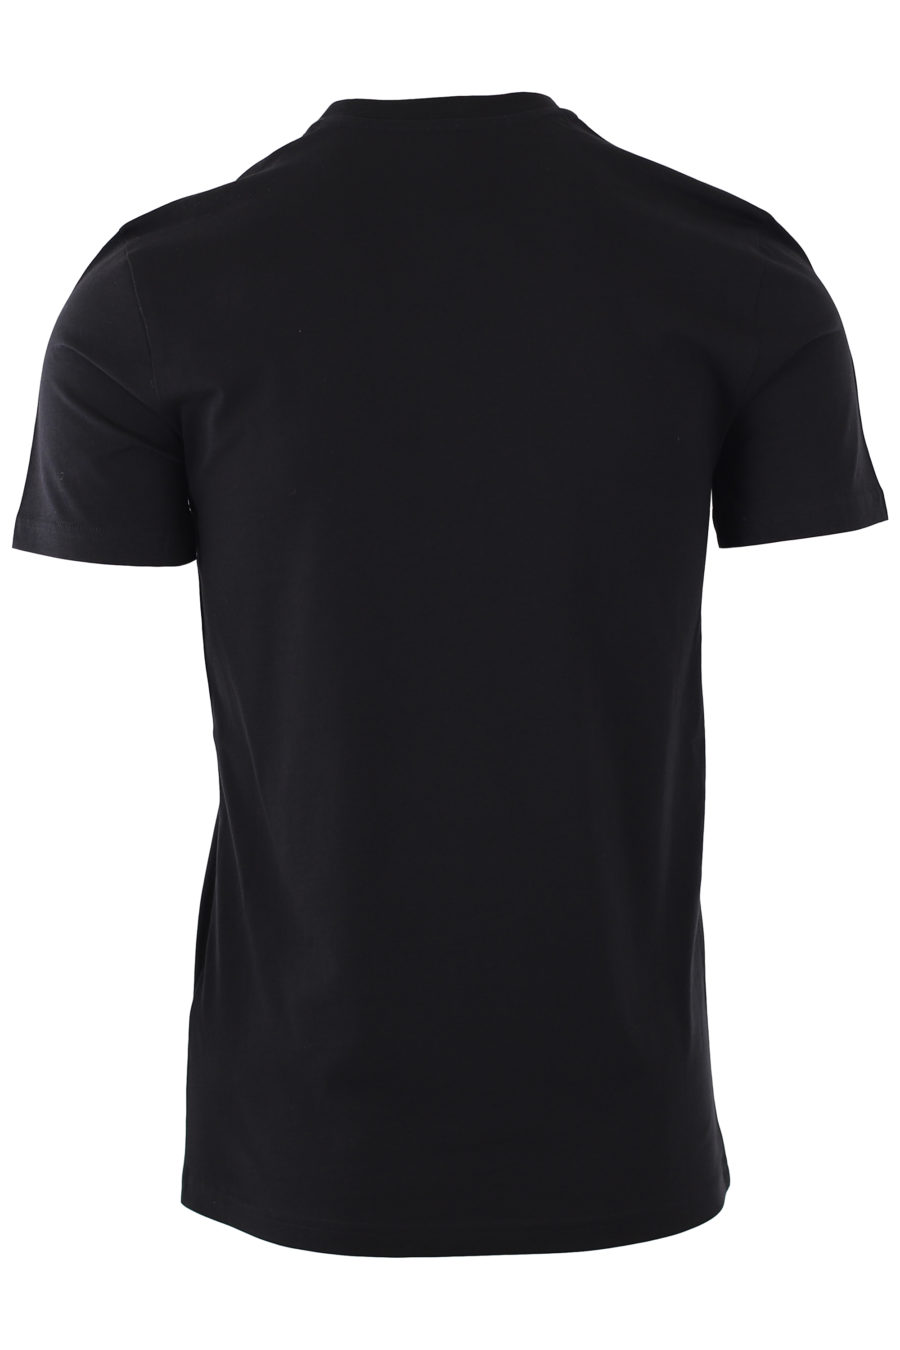 Camiseta negra con logo blanco "fantasy" - IMG 9288